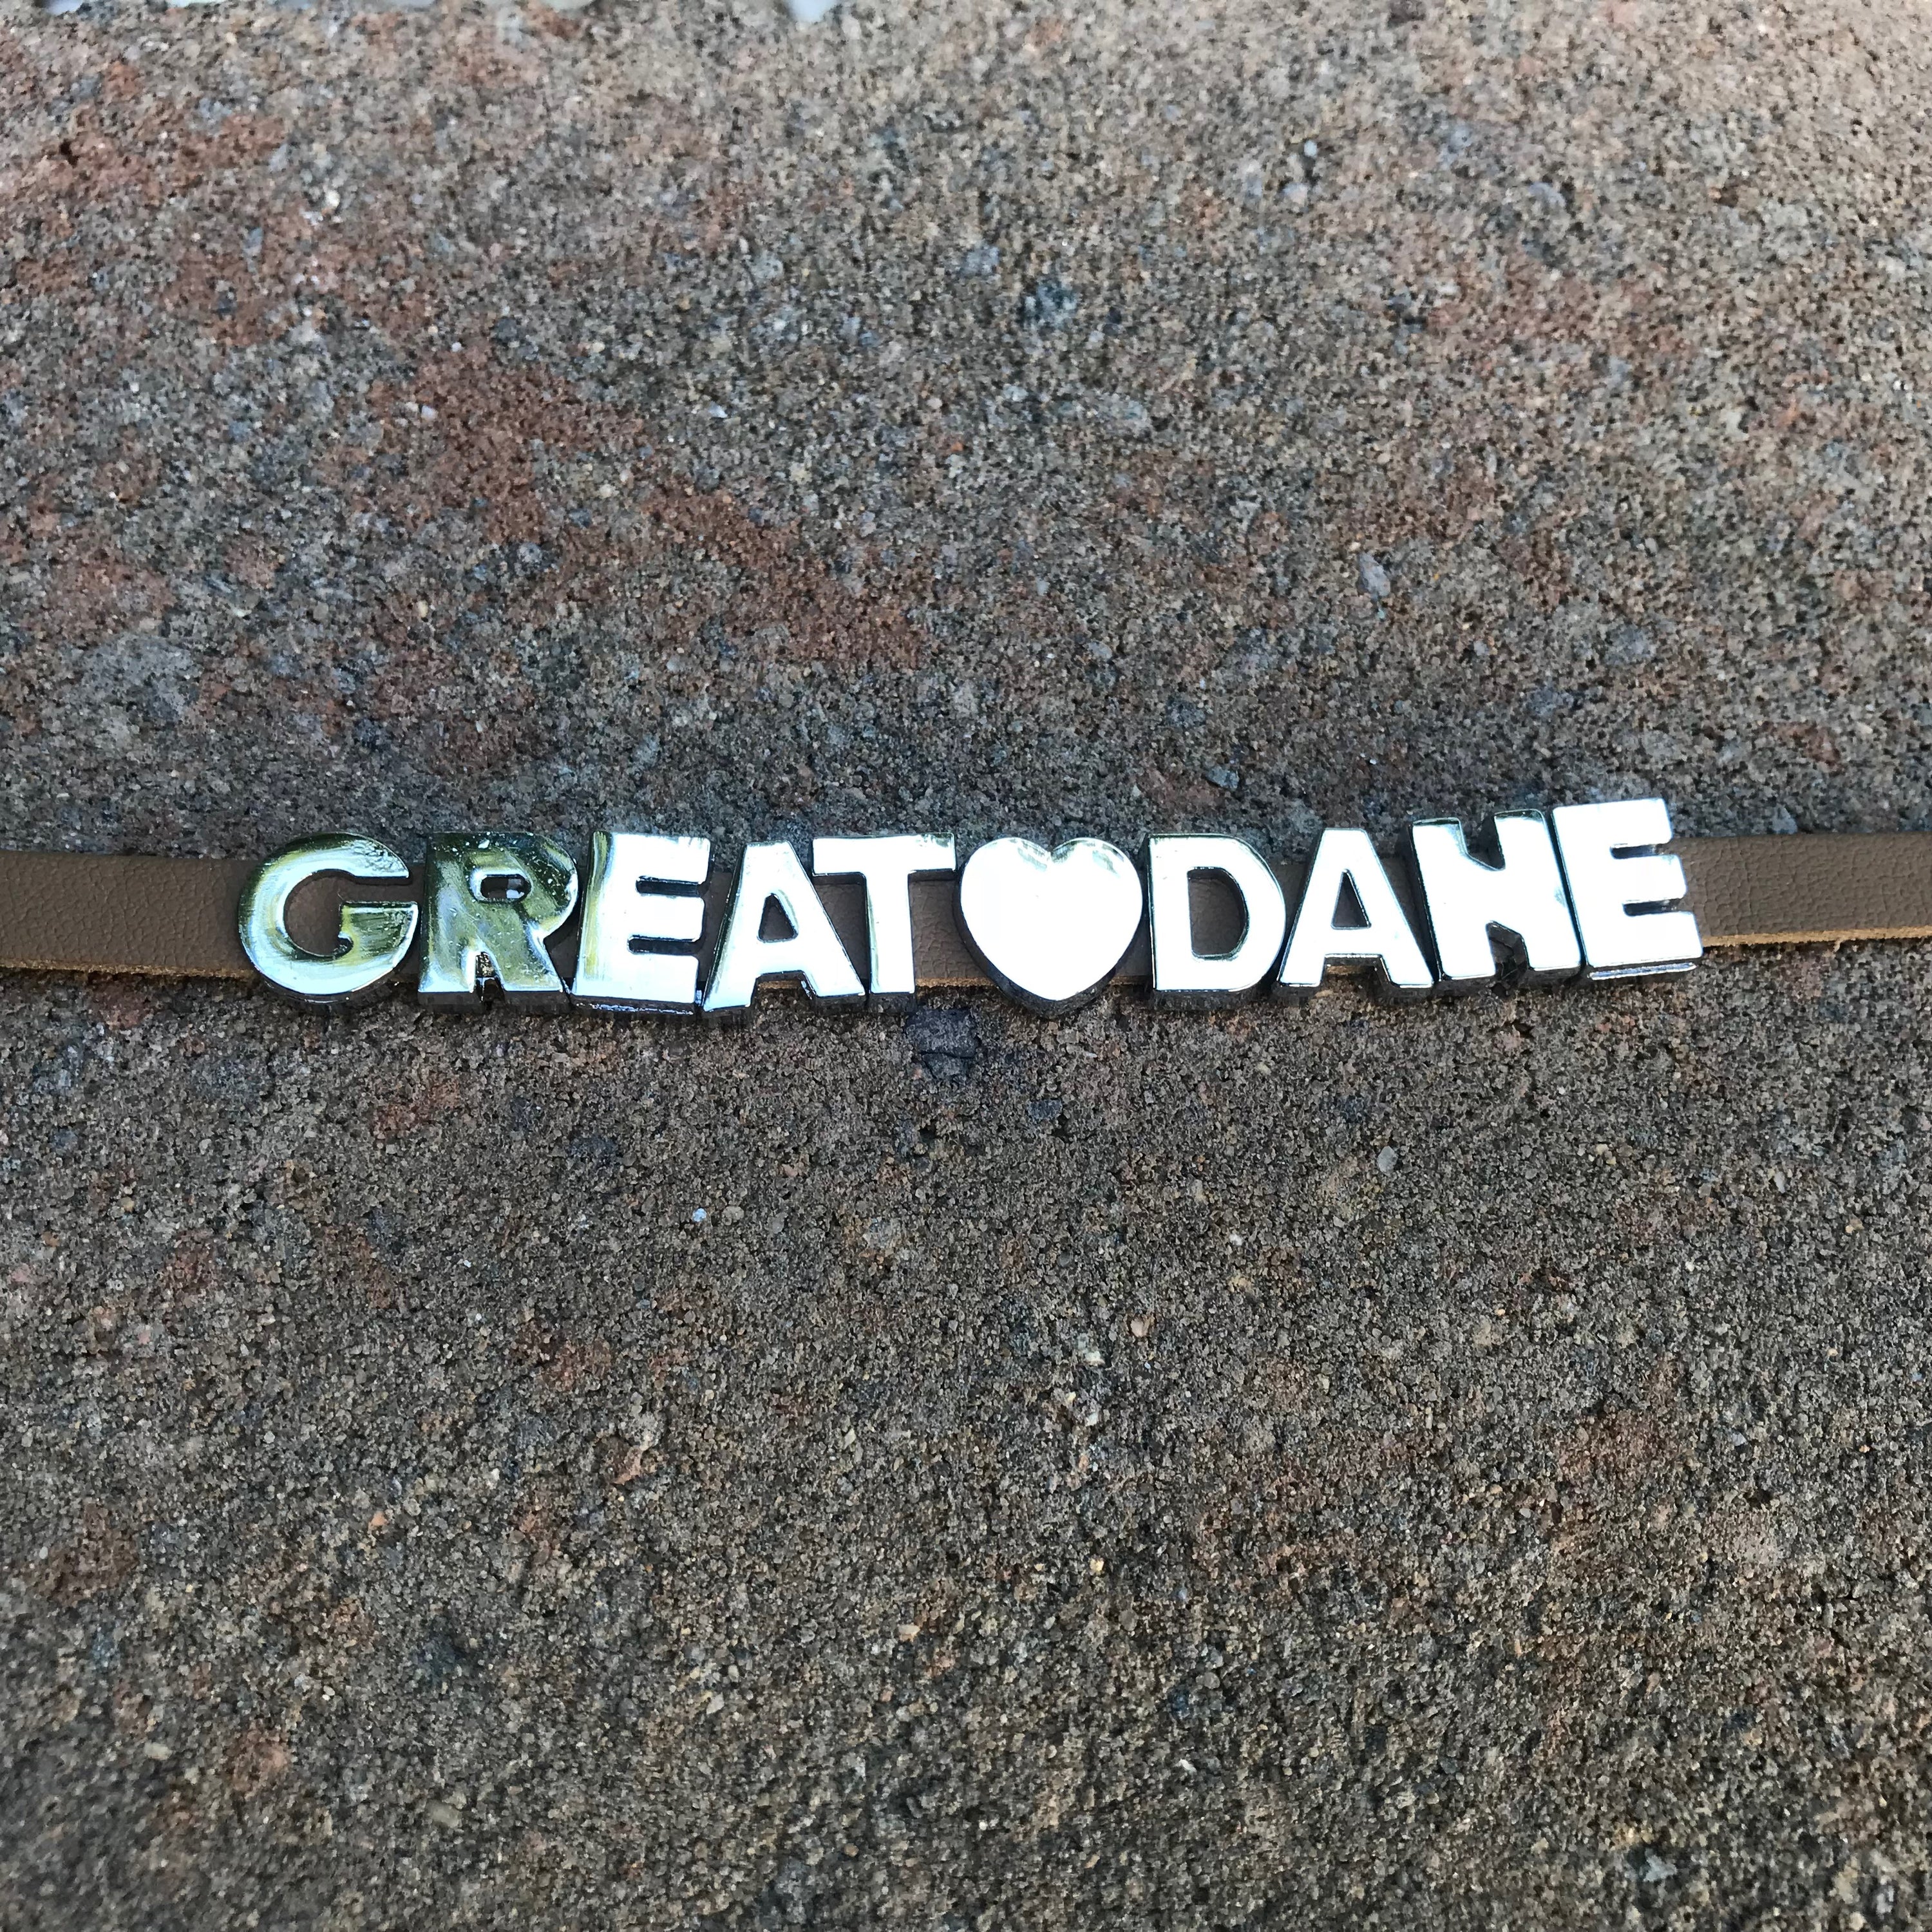 "GREAT DANE" charm/friendship bracelet - 7.5 inches